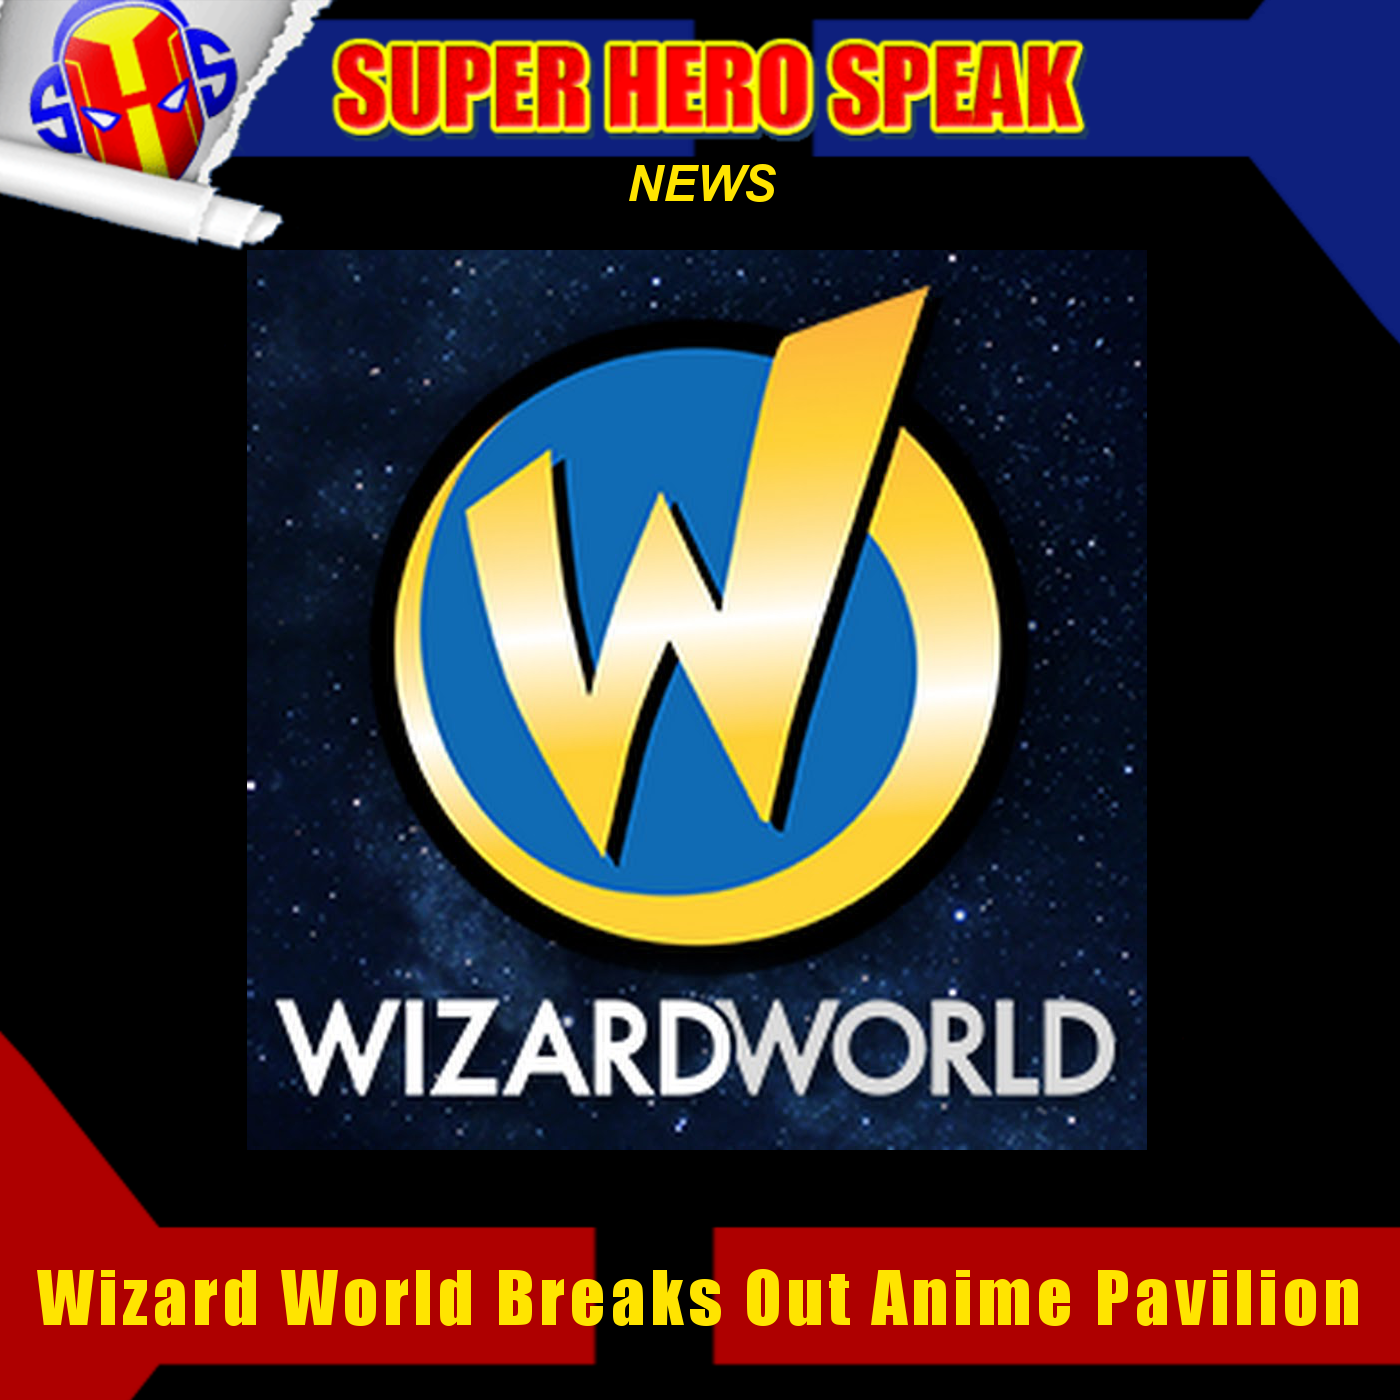 SHSNews: Wizard World Breaks Out Anime Pavilion